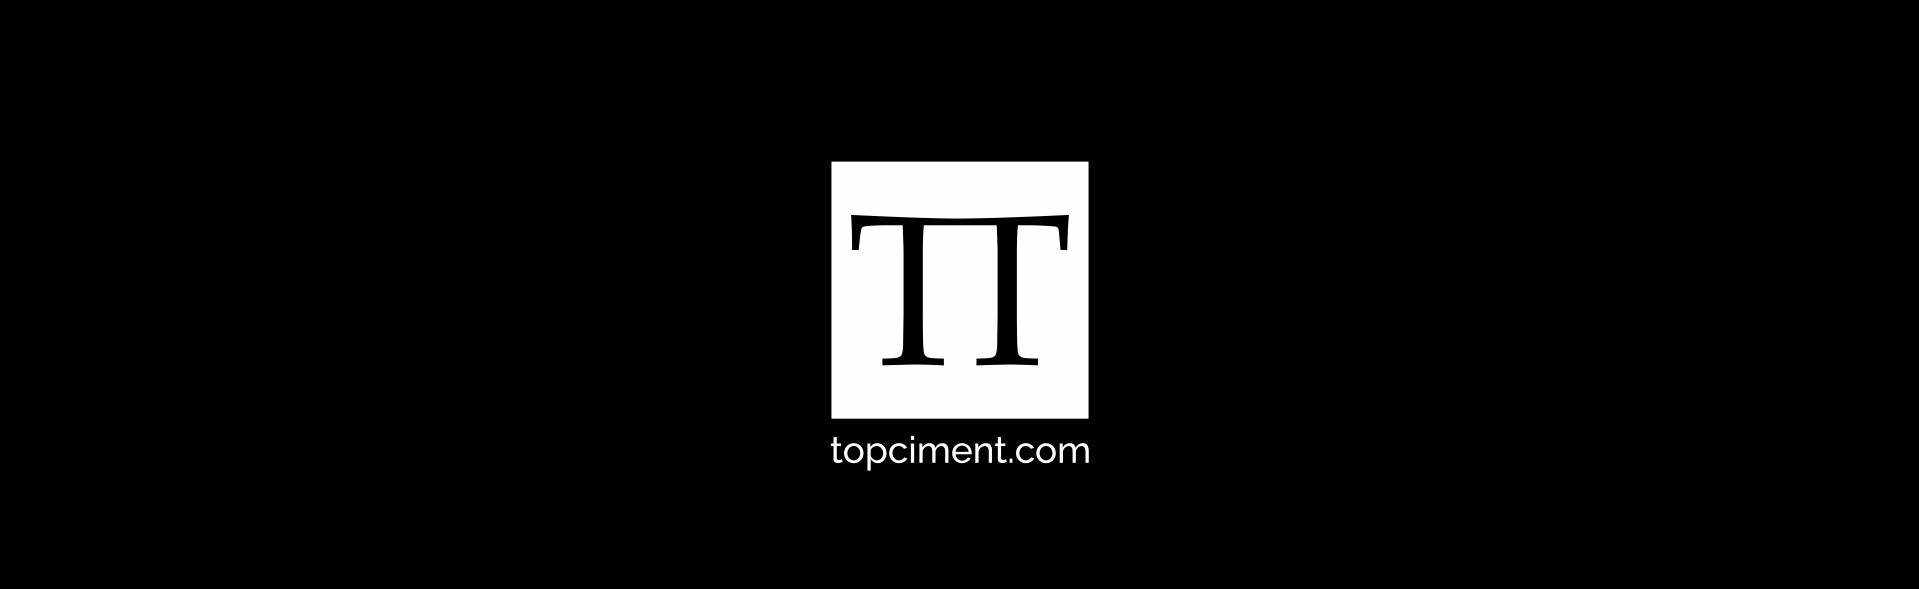 Topciment logo on a black background